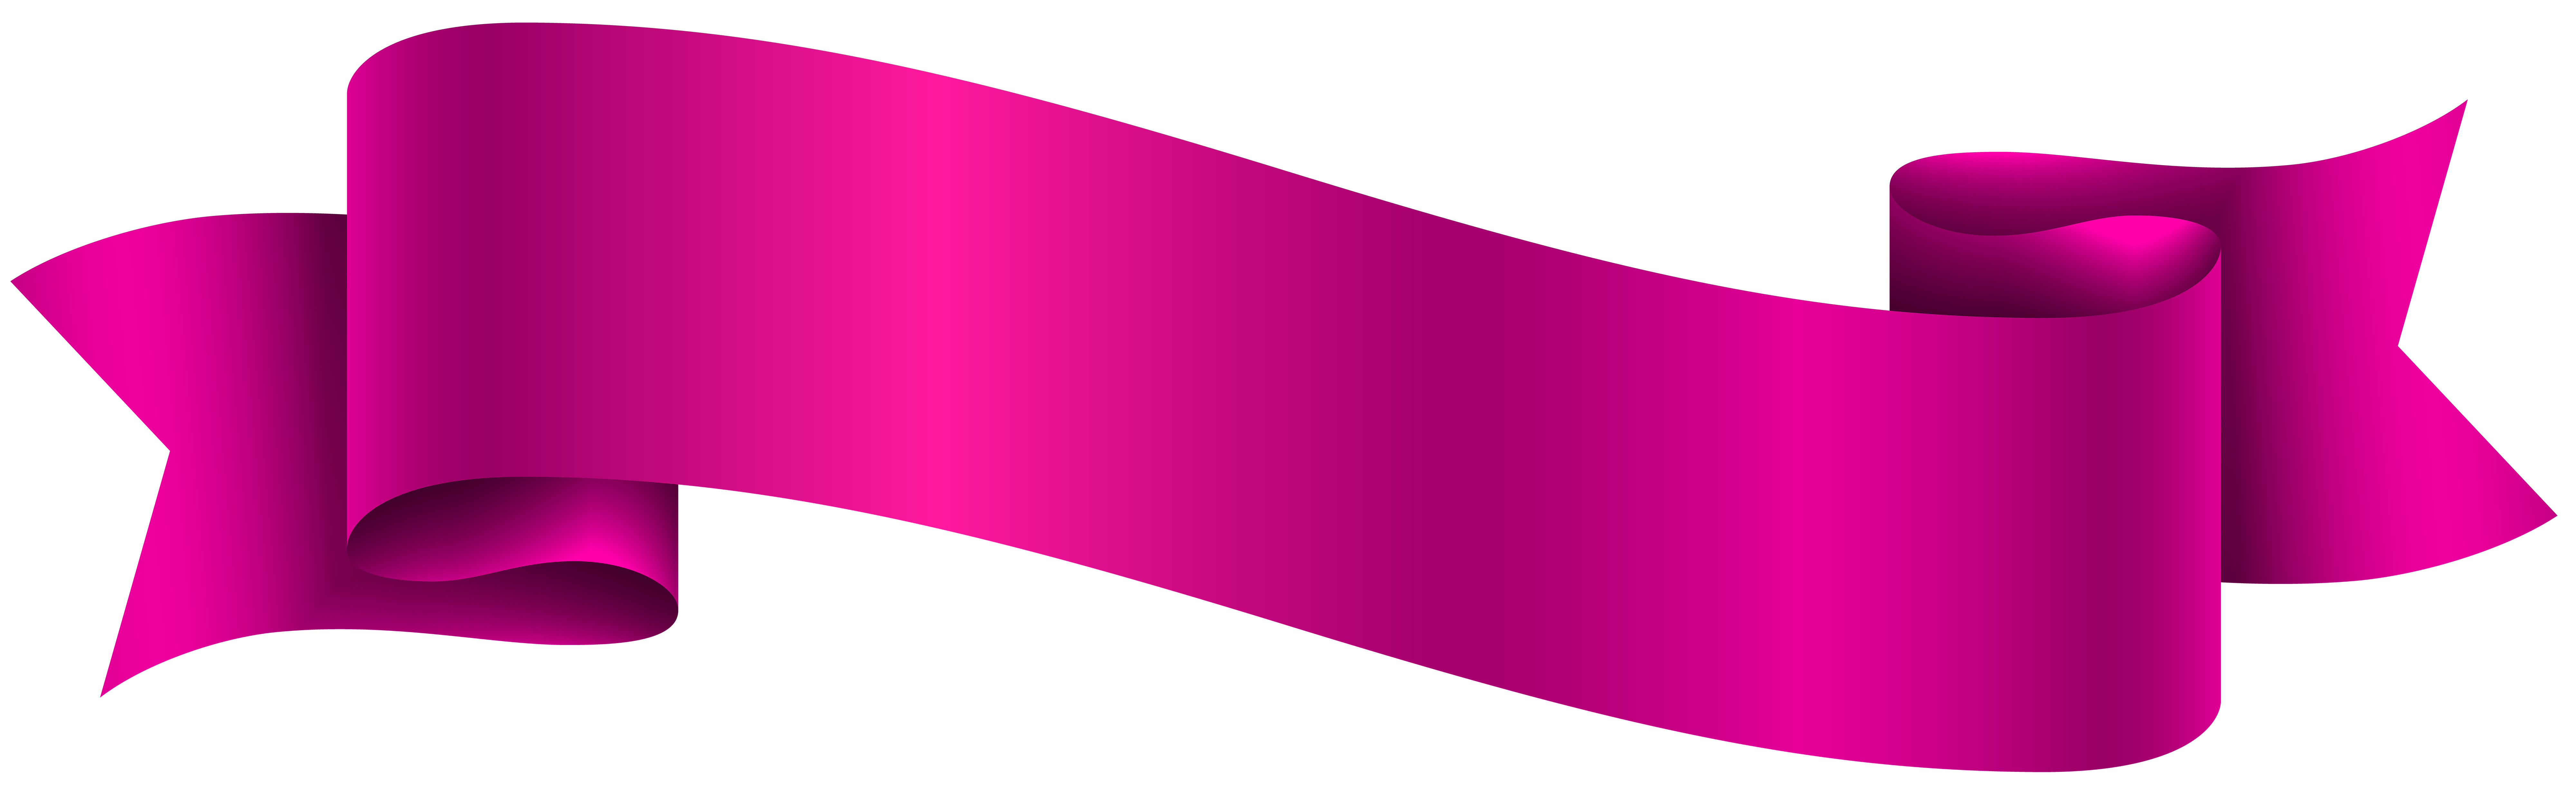 Pink Banner Transparent PNG Clip Art Image | Gallery Yopriceville ...